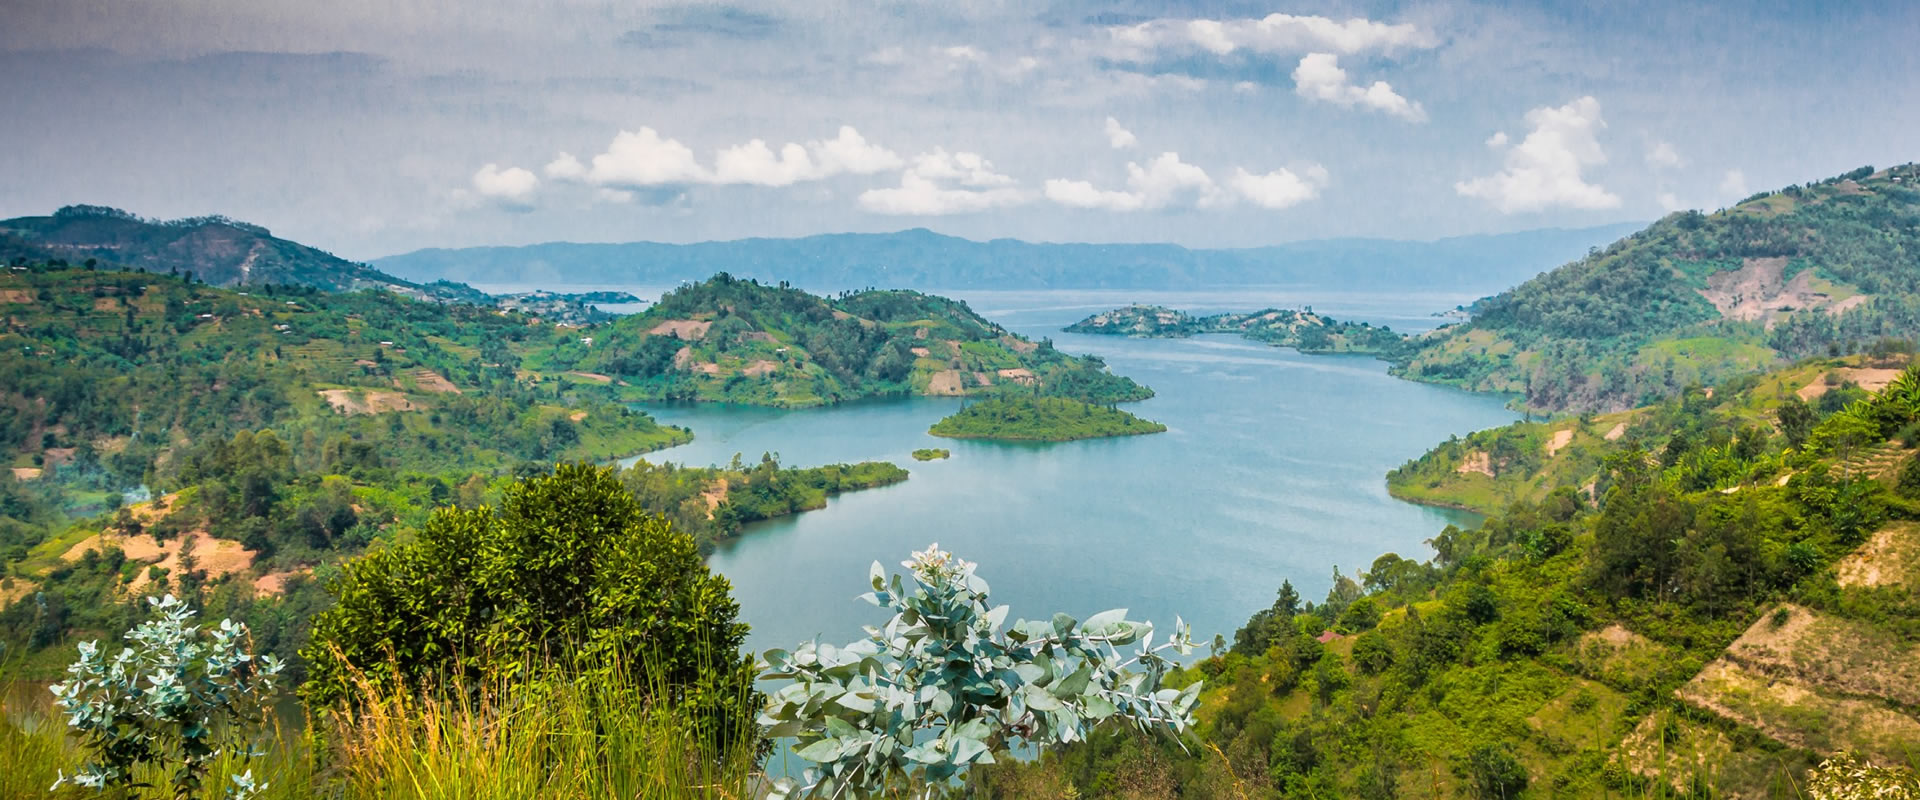 4 days rwanda safari with lake kivu